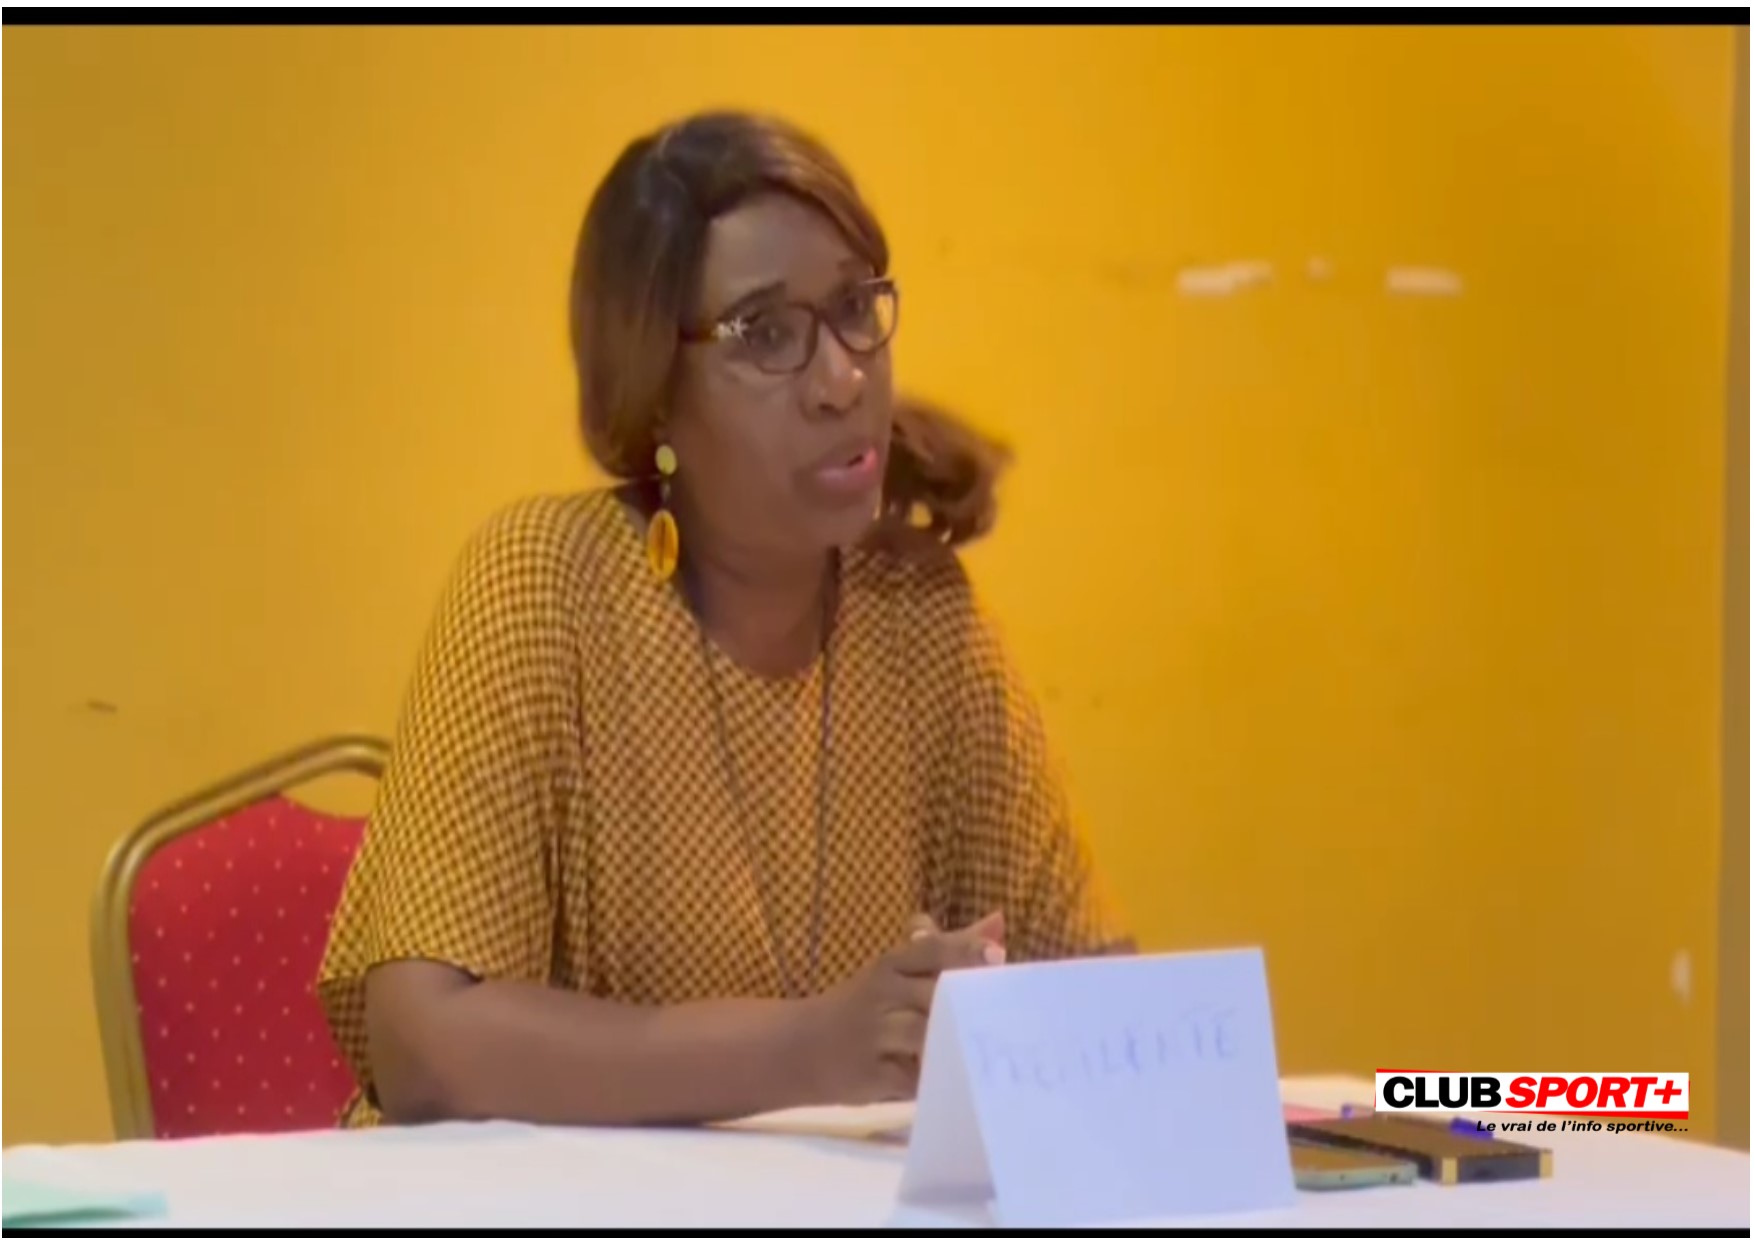 Medias : Priscille Moadougou, nouvelle présidente de l’UFRESA Cameroun